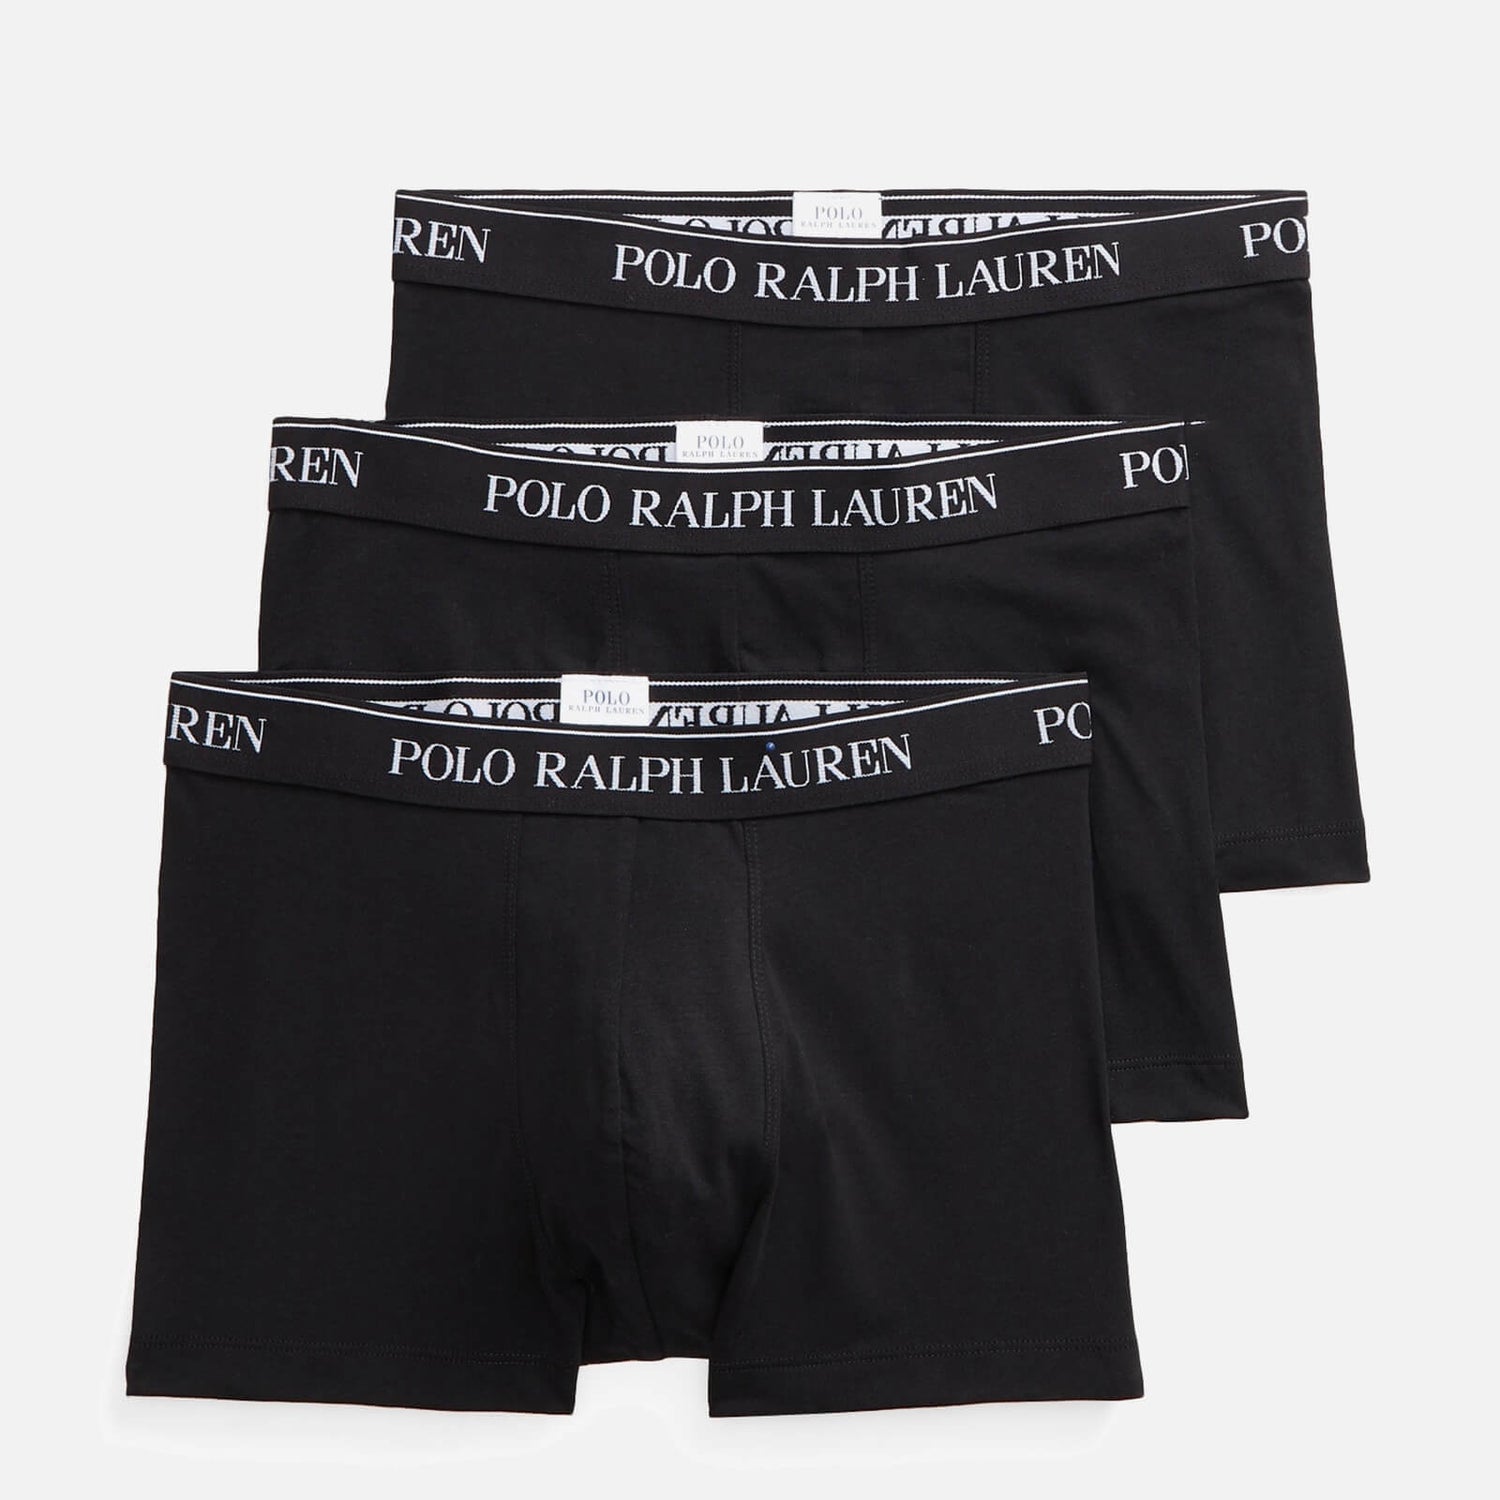 Polo Ralph Lauren Men's 3-Pack Trunk Boxers - Polo Black - S